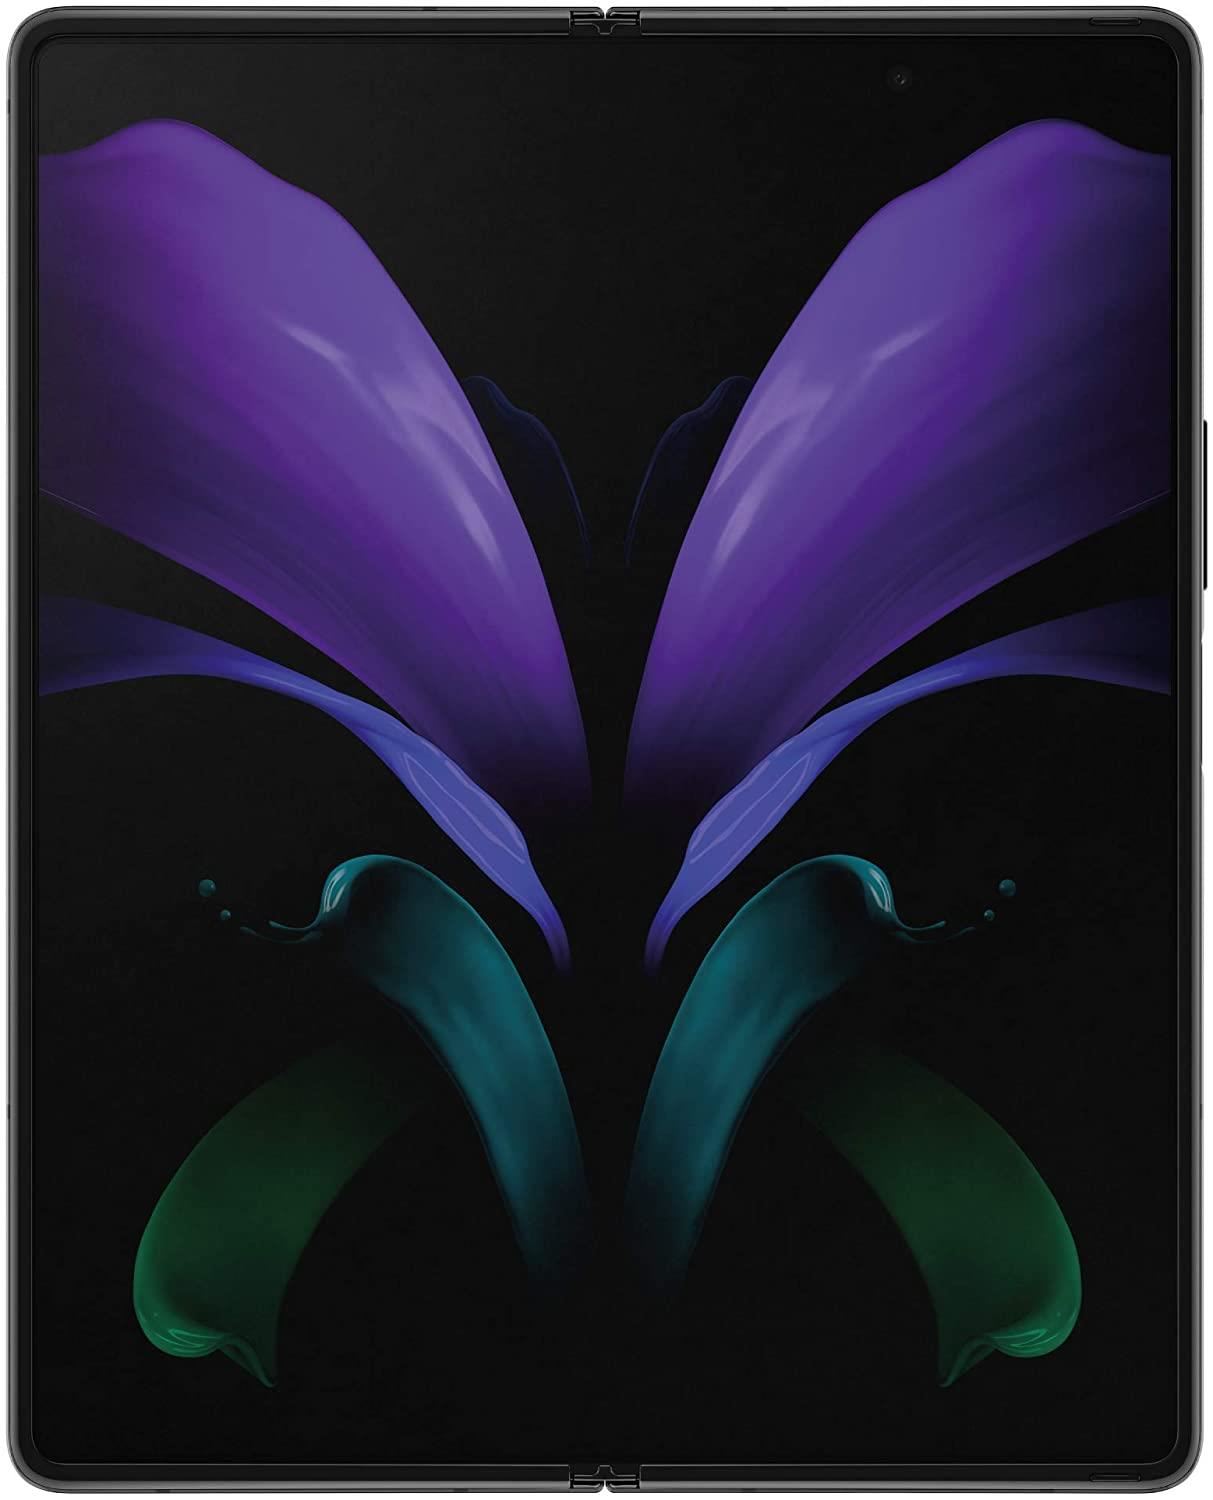 Samsung Galaxy Z Fold2 5G Smartphone Unlocked 256-512GB